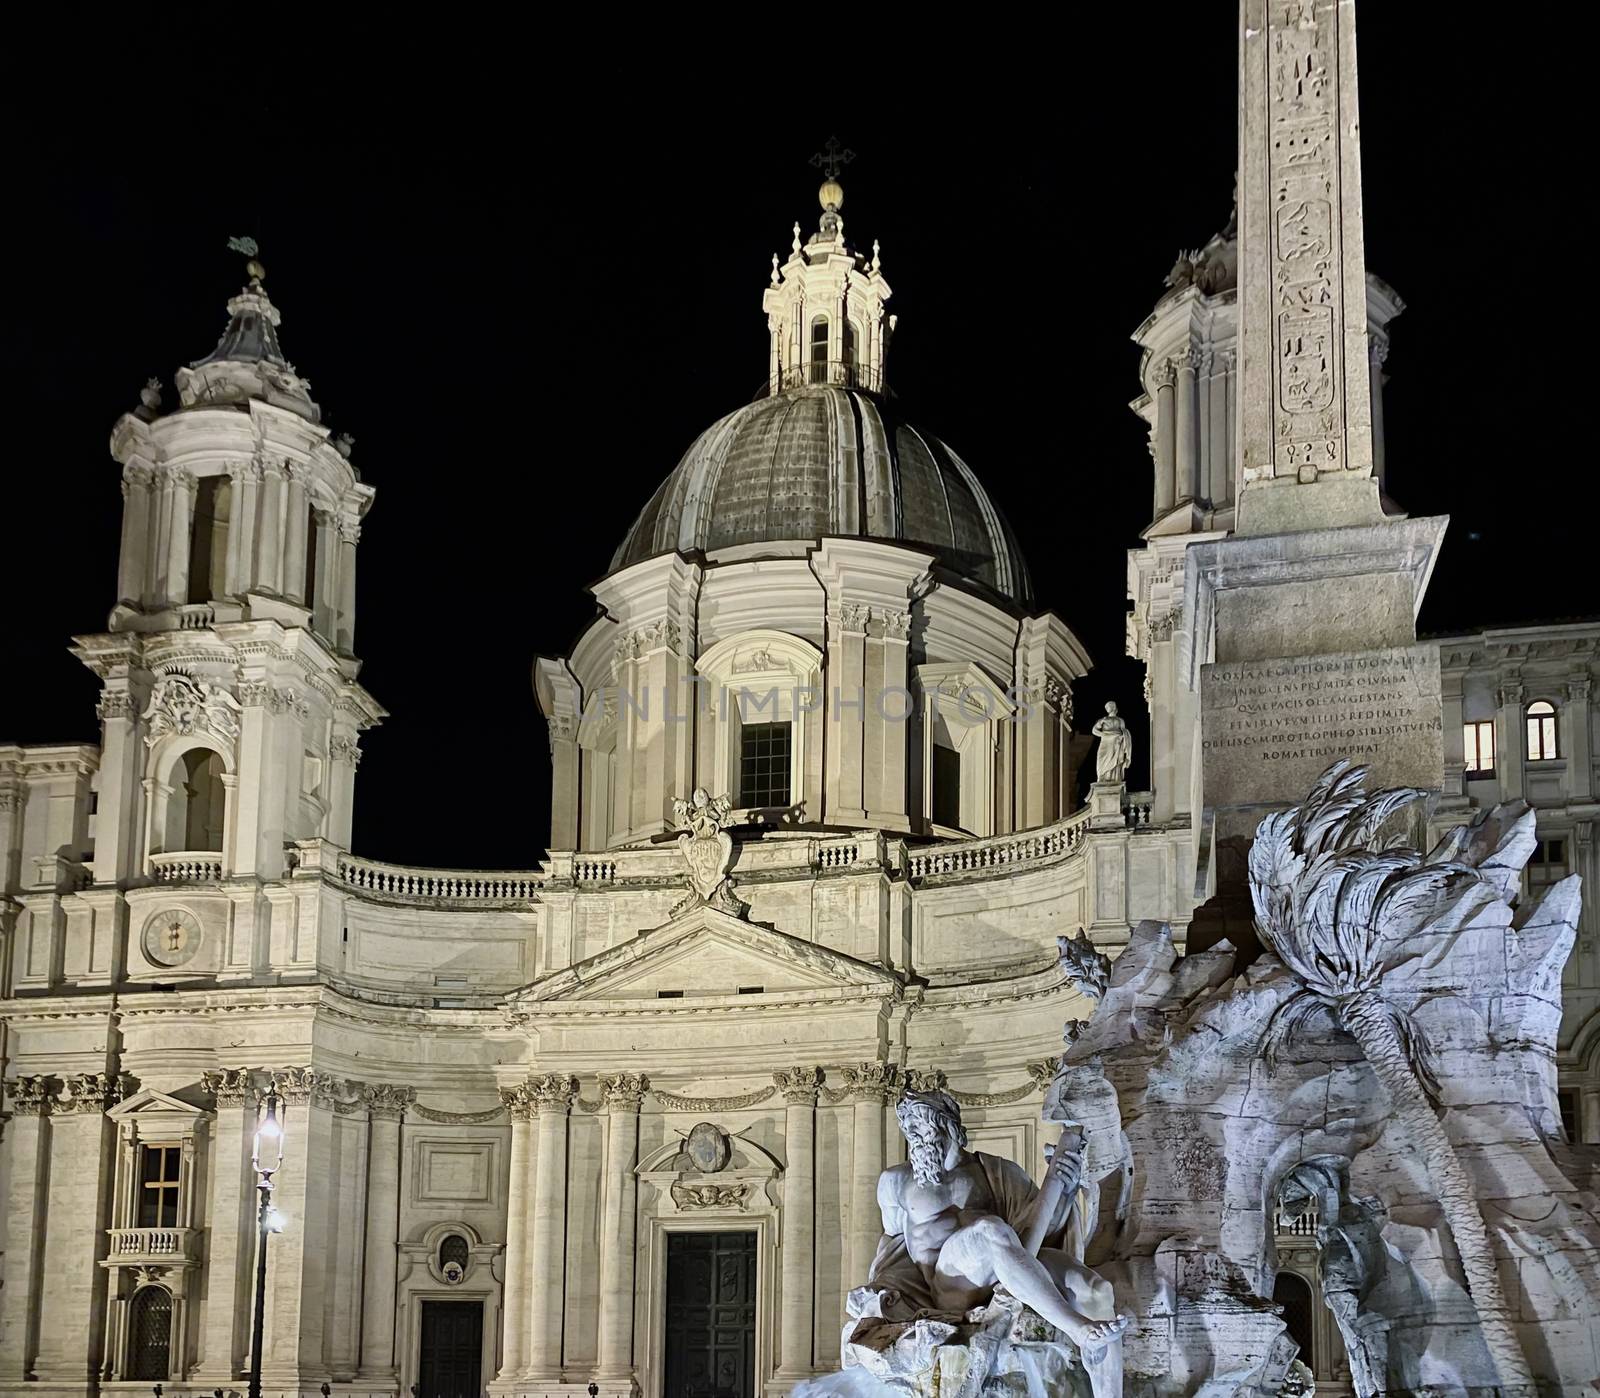 Night shot in piazza navona in Rome by rarrarorro